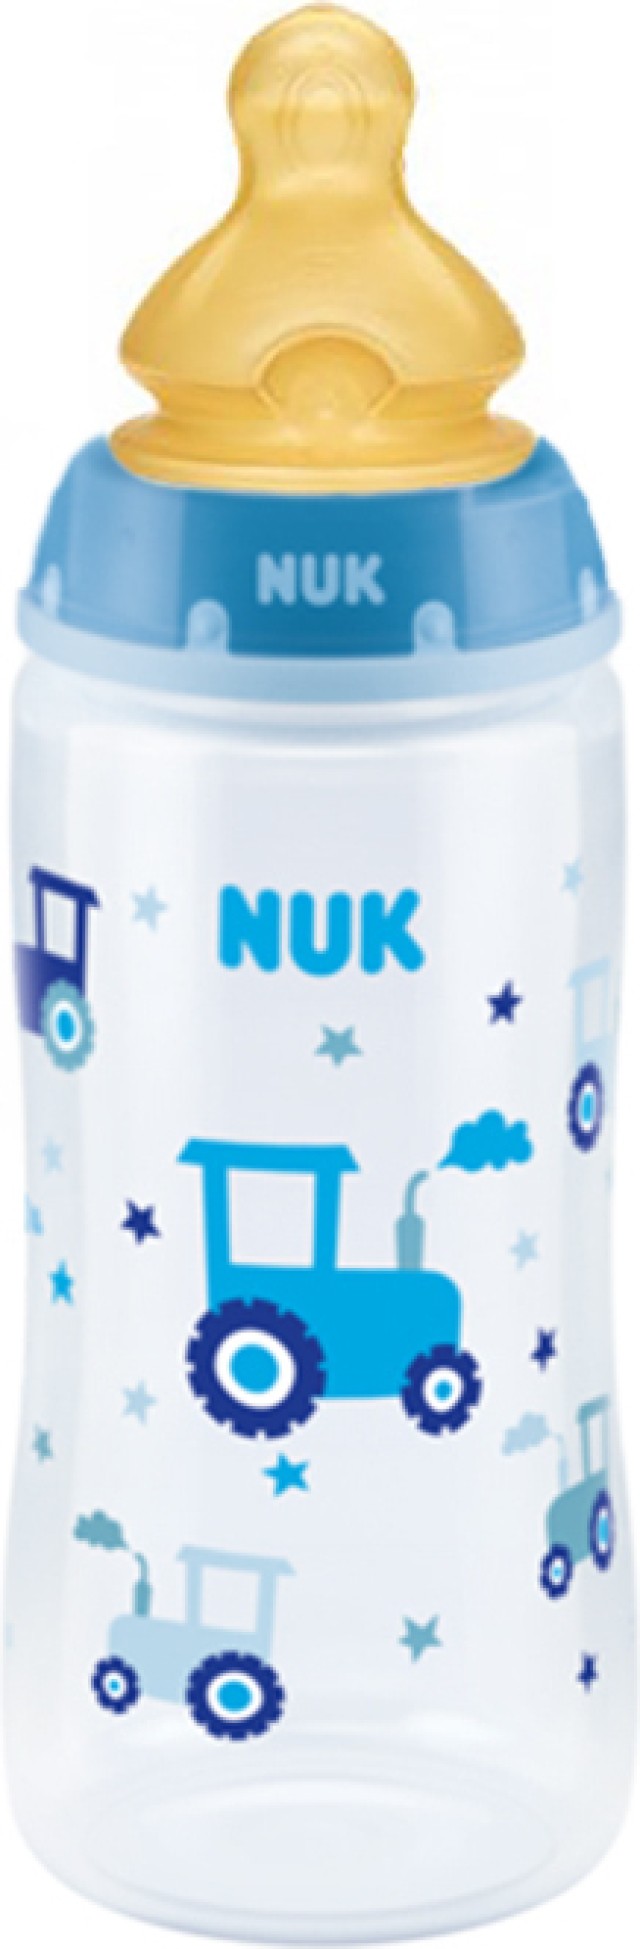 NUK Μπιμπερό Πλαστικό 0-6m First Choice Plus Με Θηλή Καουτσούκ & Δείκτη Ελέγχου Θερμοκρασίας Μπλε Τρακτέρ (10.741.939), 300ml